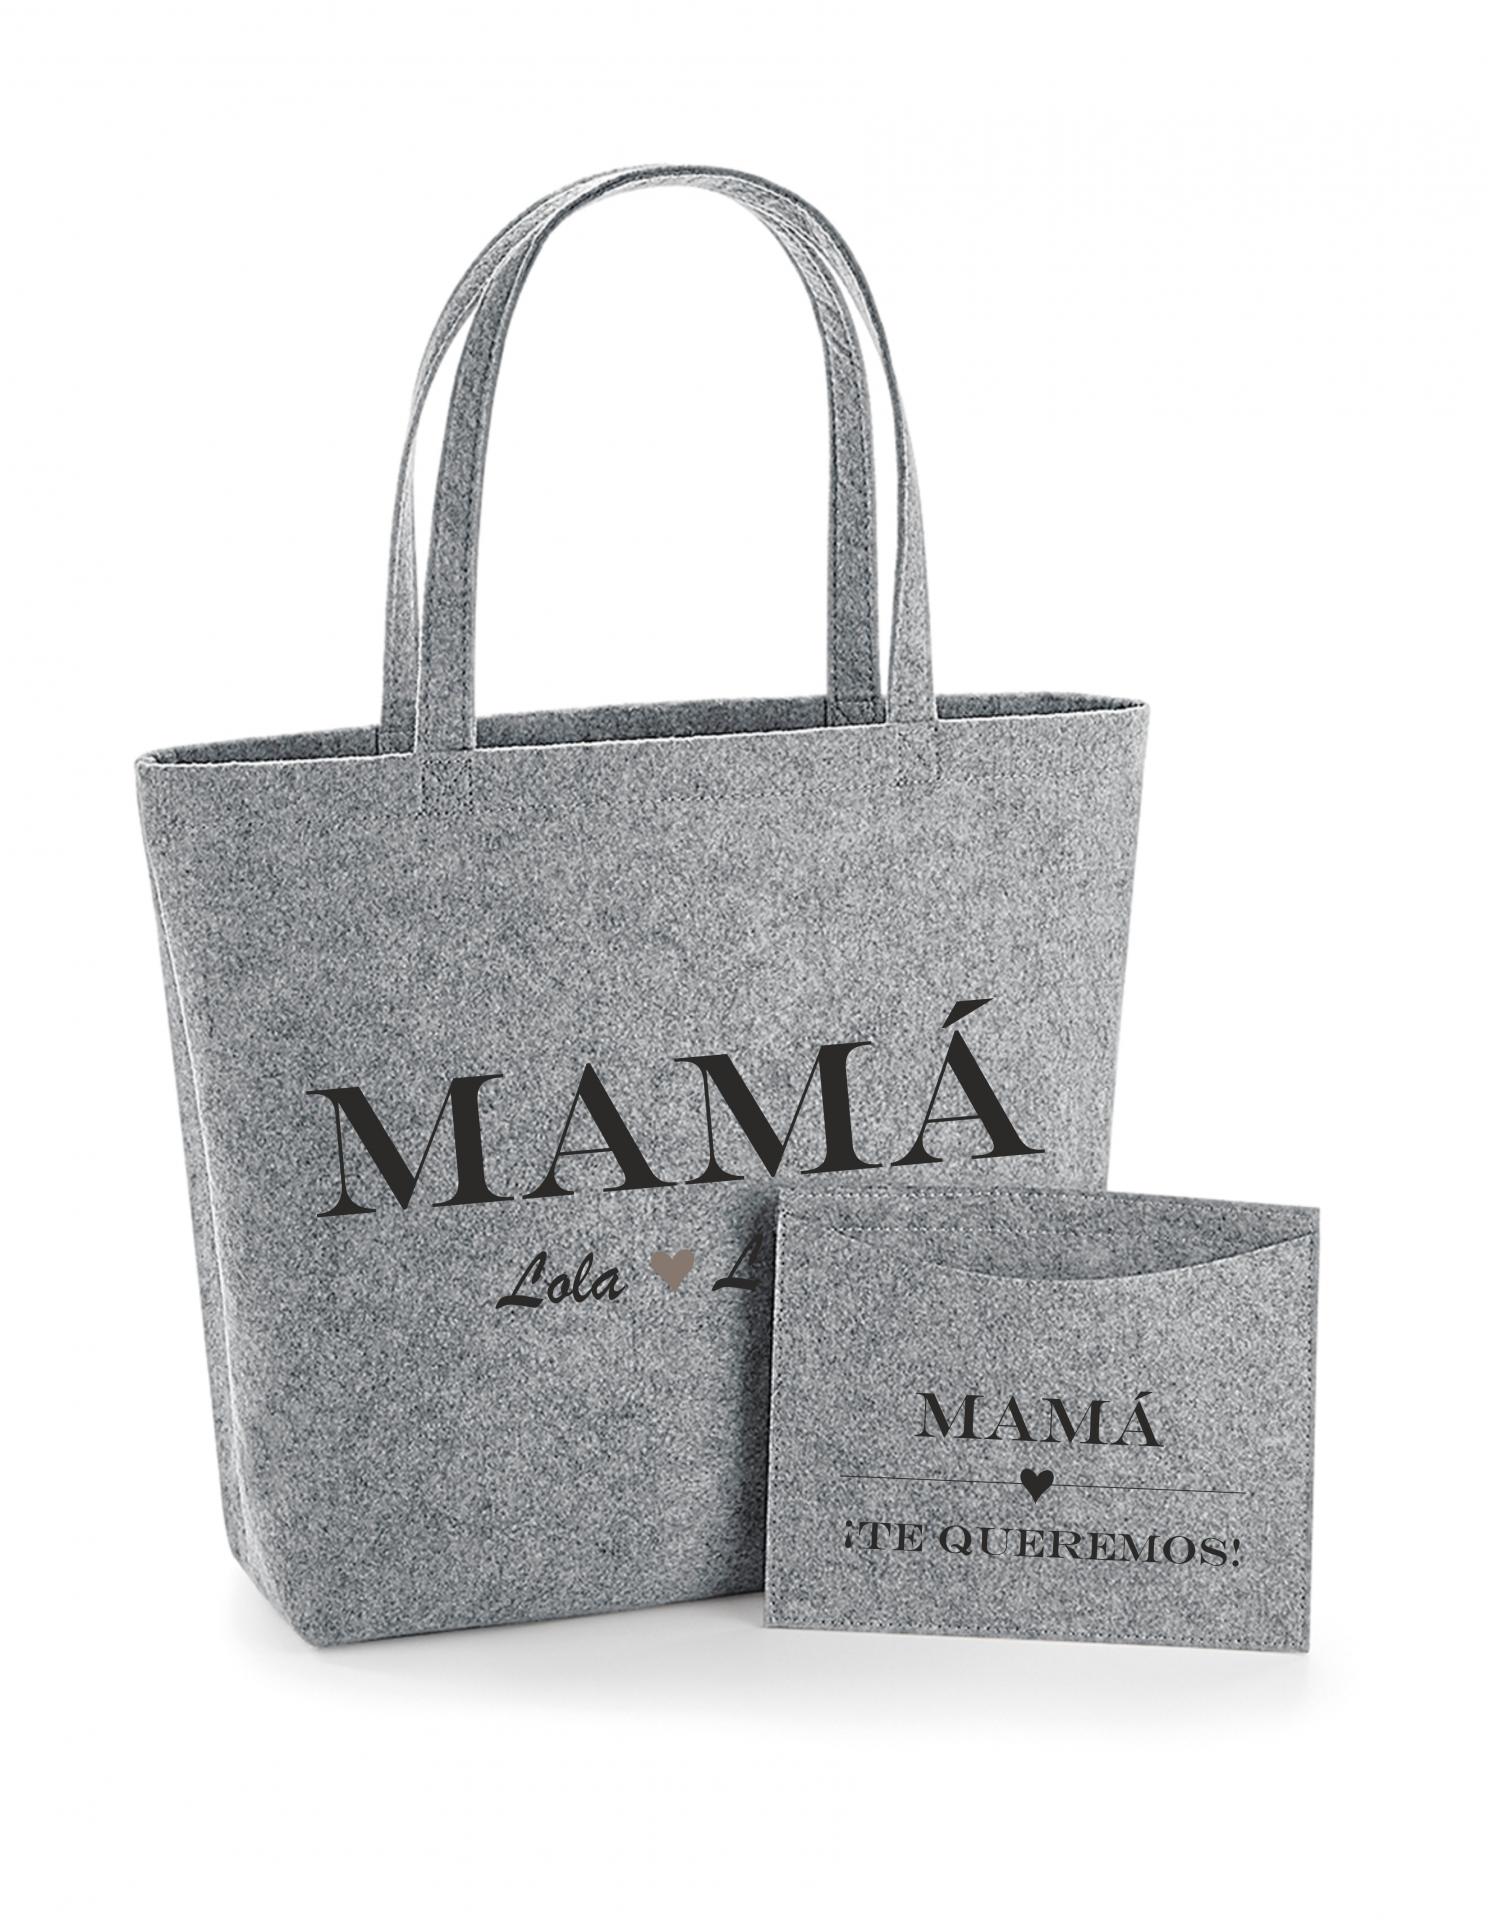 Bolso Personalizado con sobre interior con frase y nombres - Mamá - bolso de fieltro - bolsa -  idea regalo original,  regalo personalizado, regalo navidad, día de la madre, shopper fieltro.